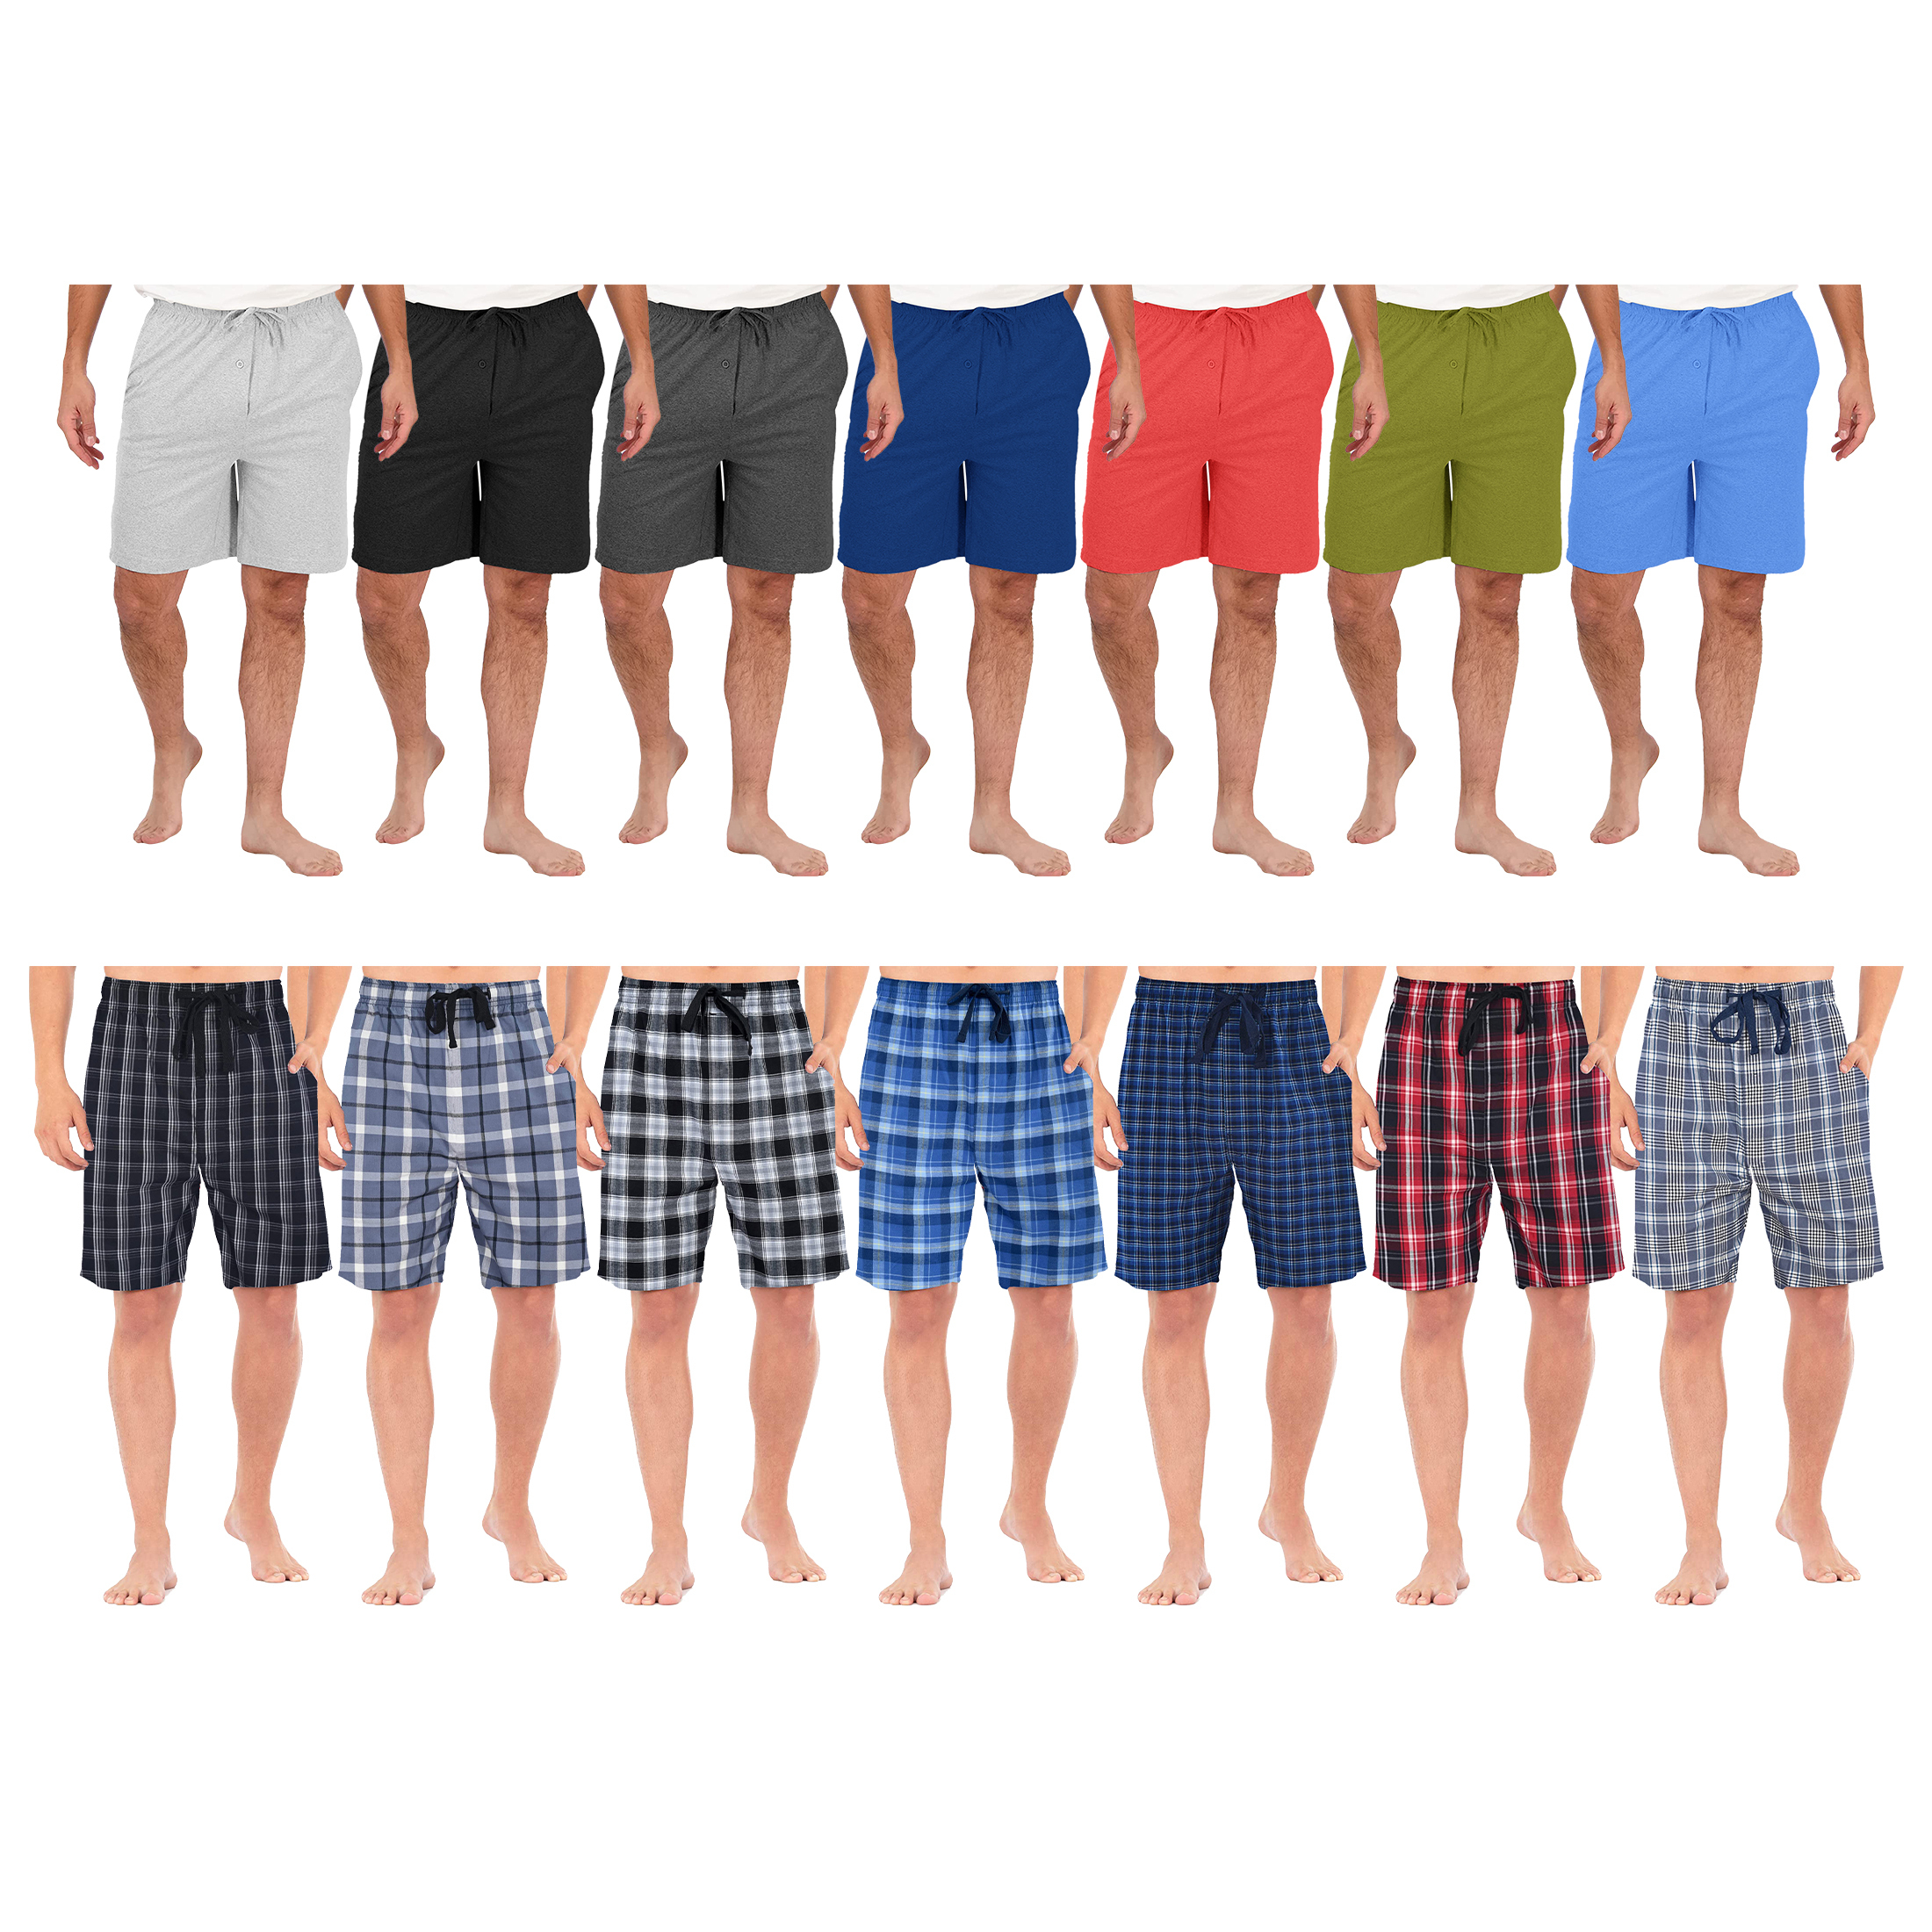 Multi-Pack: Men's Ultra-Soft Jersey Knit Sleep Lounge Pajama Shorts For Sleepwear - Plaid, 1 Pack, Large